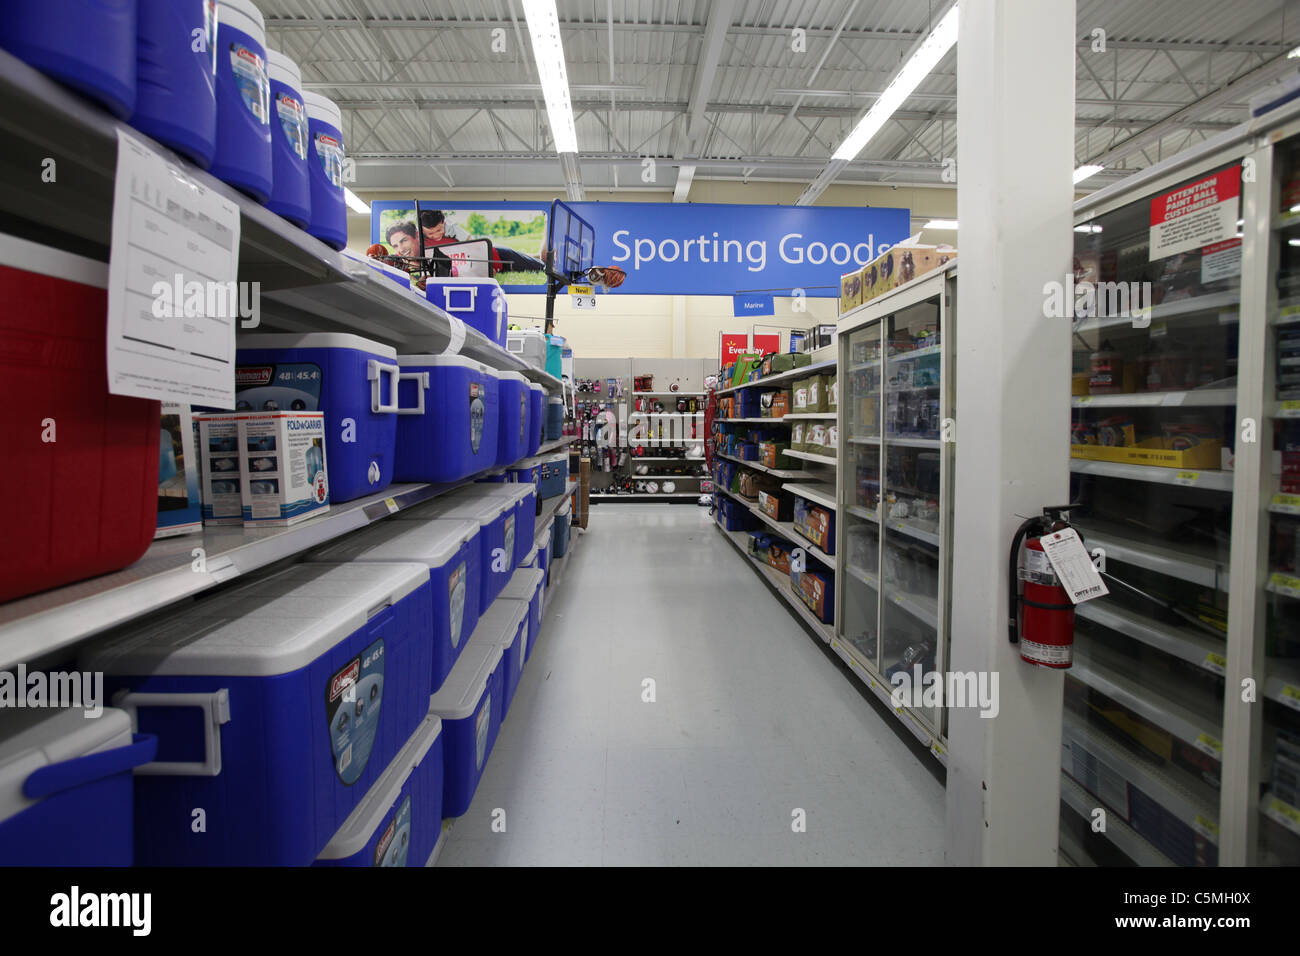 Walmart Sporting Goods Section In Walmart Supercentre In Kitchener C5MH0X 